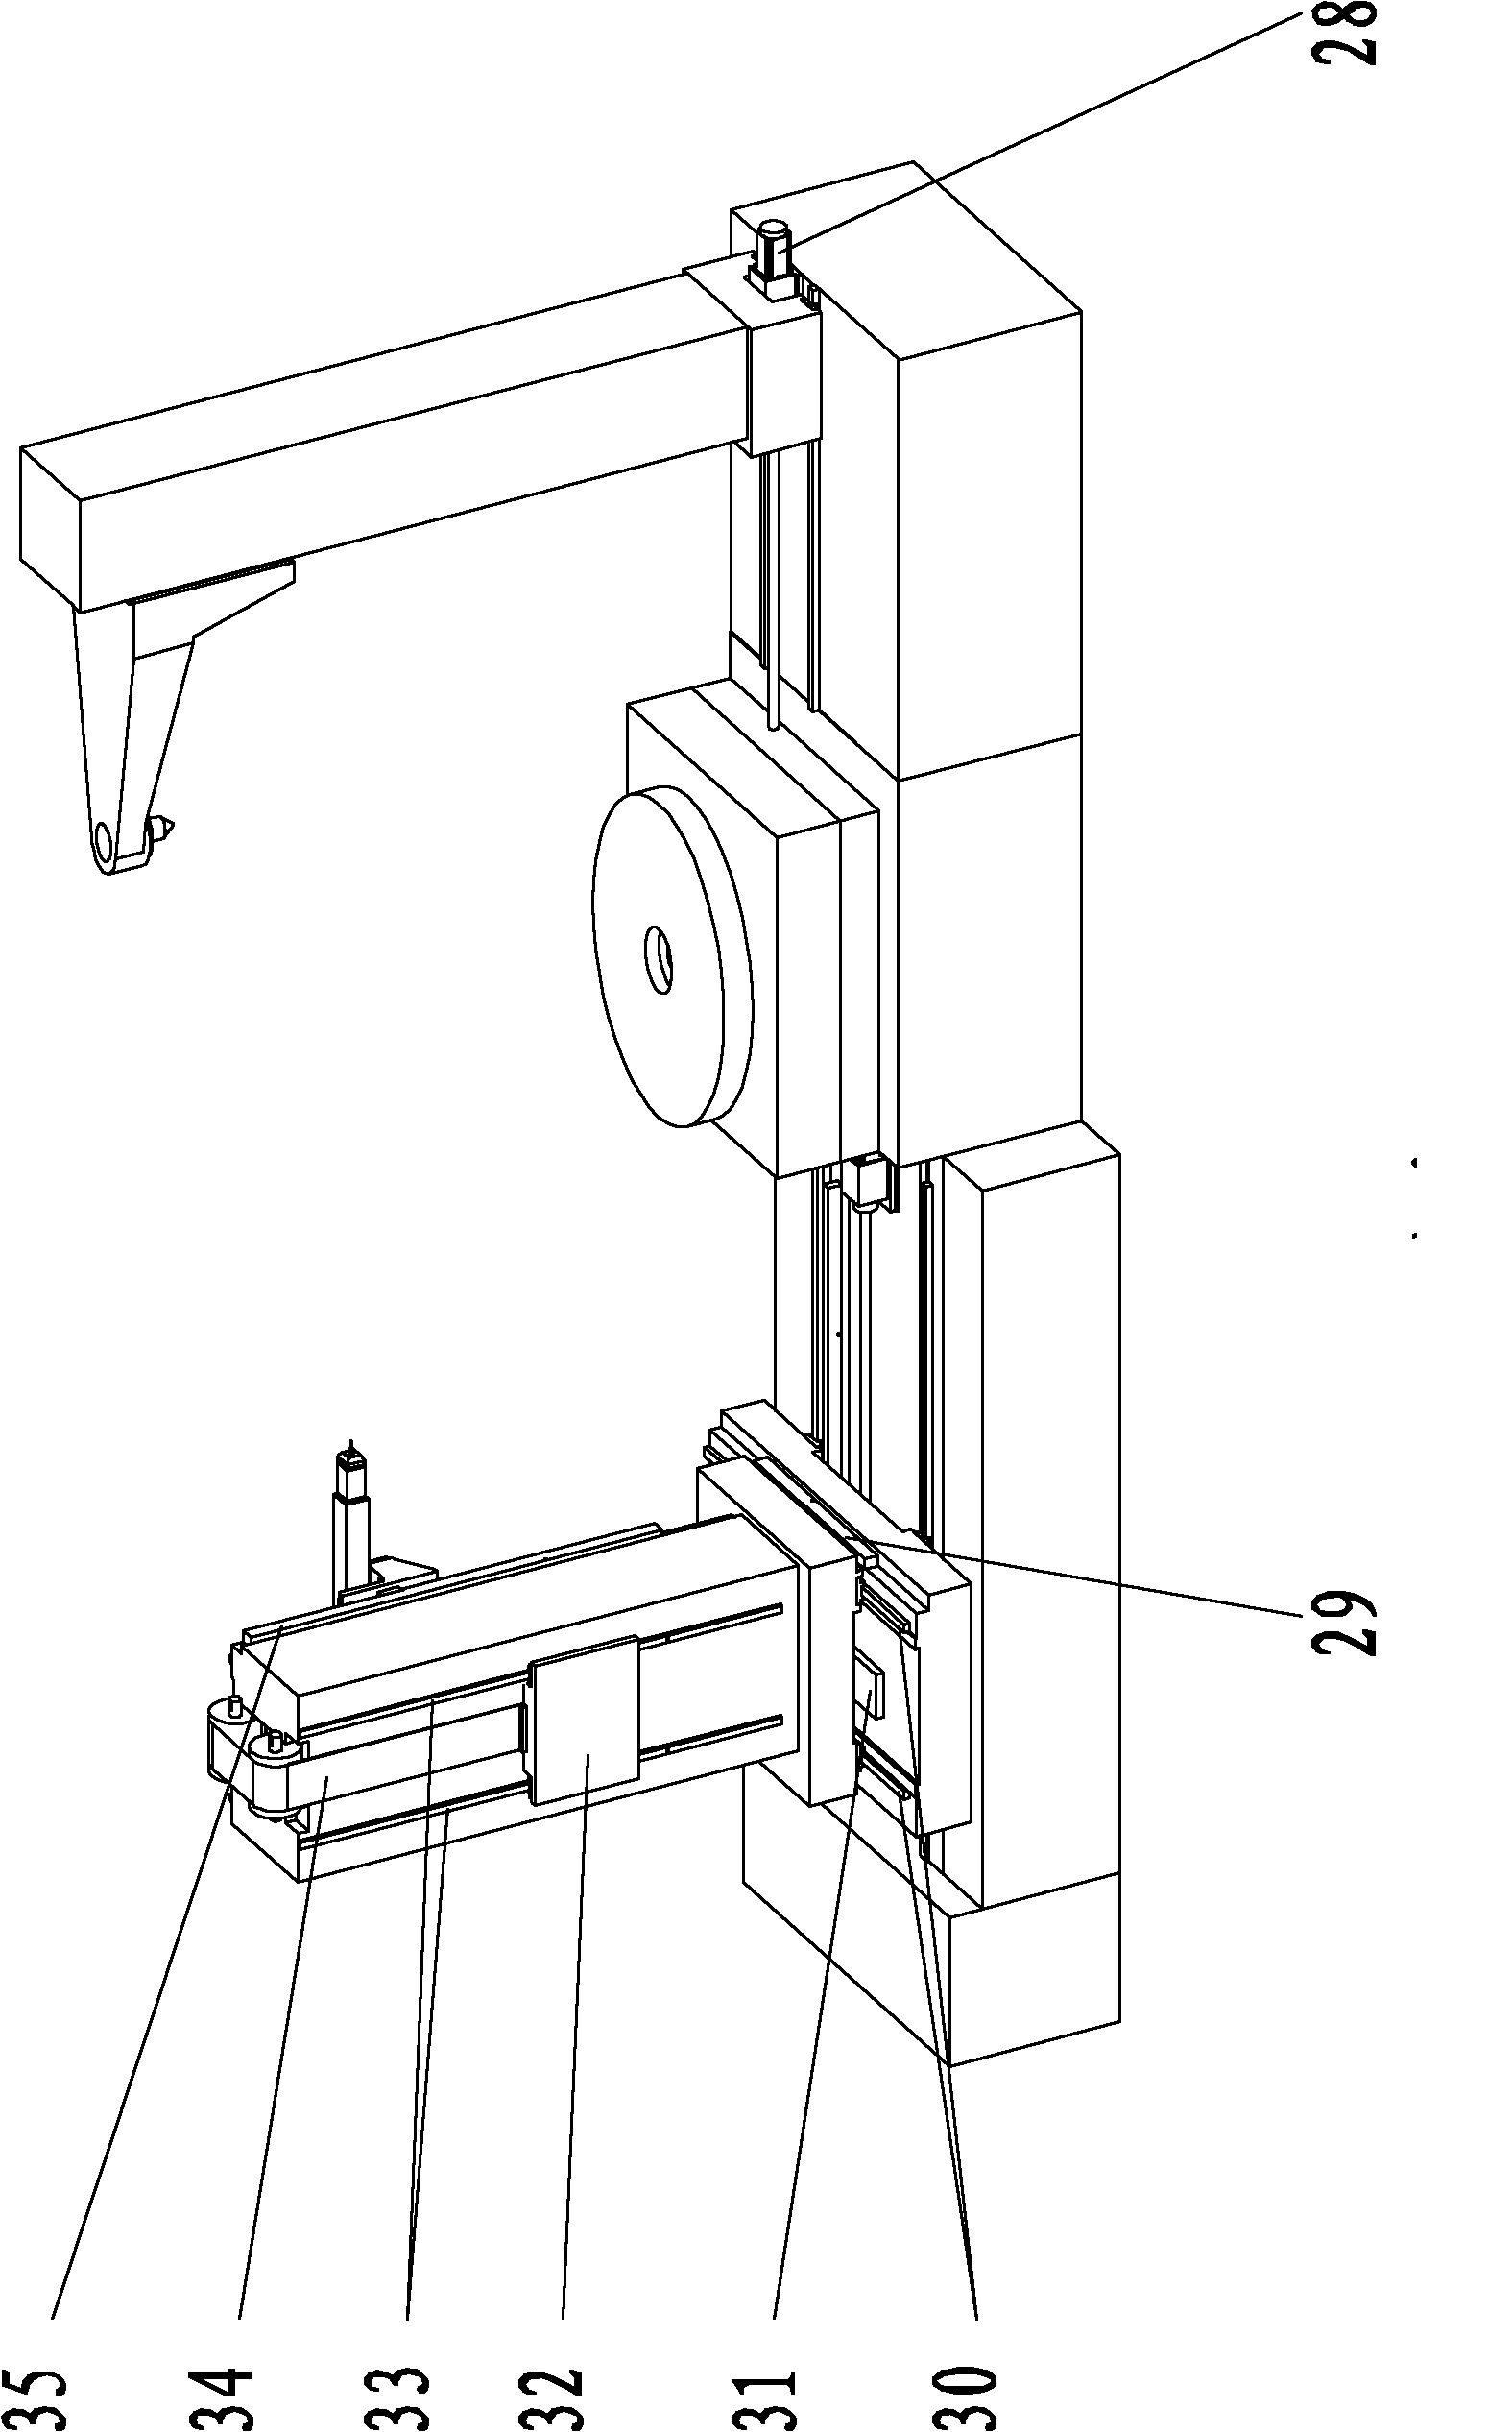 Large gear measuring instrument